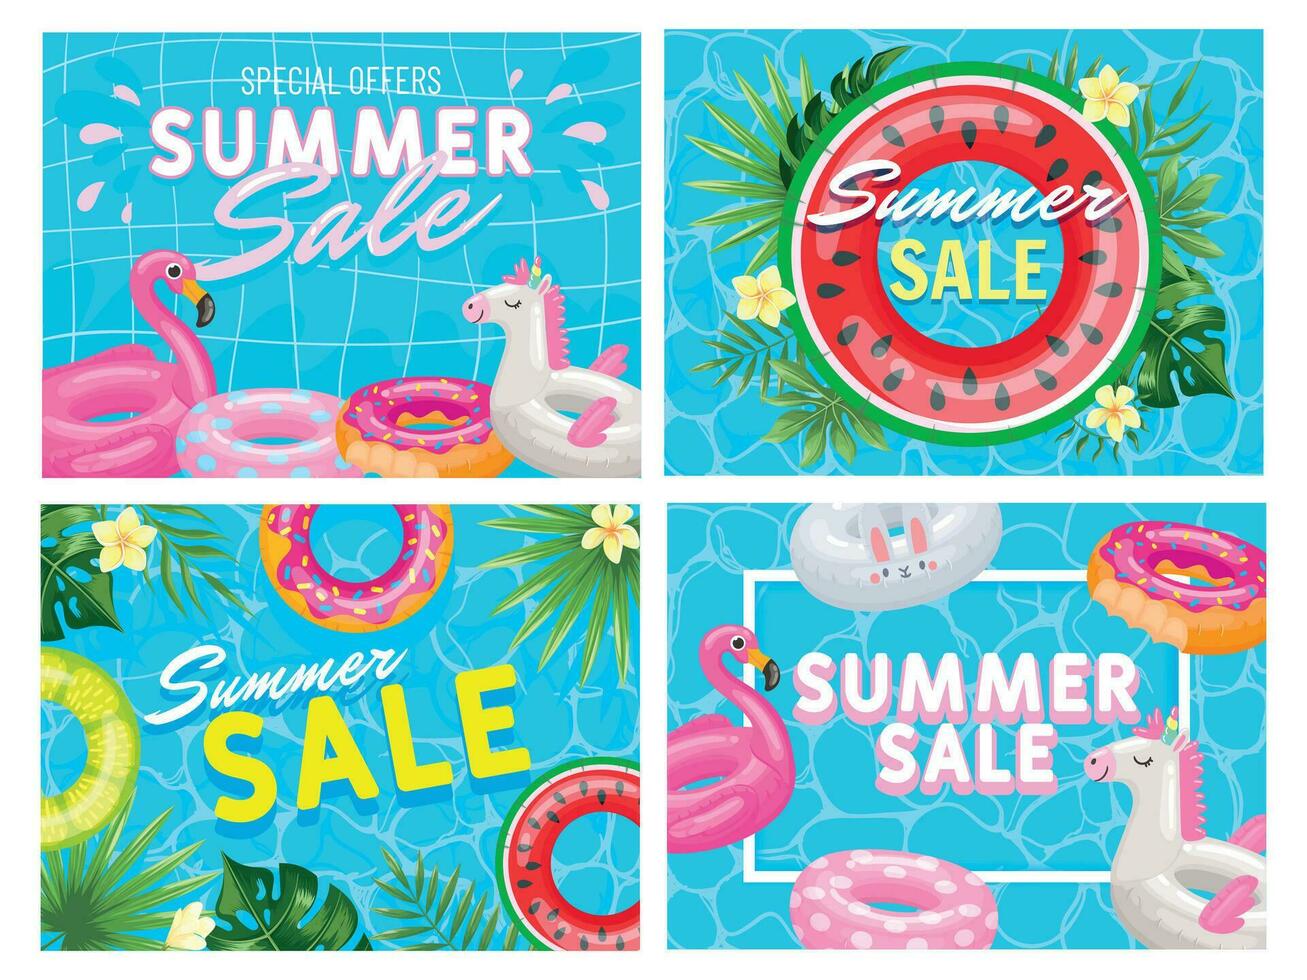 Summer sale banner. Summer pool deal flyer, fancy pink flamingo and watermelon floating ring special offer vector illustration set